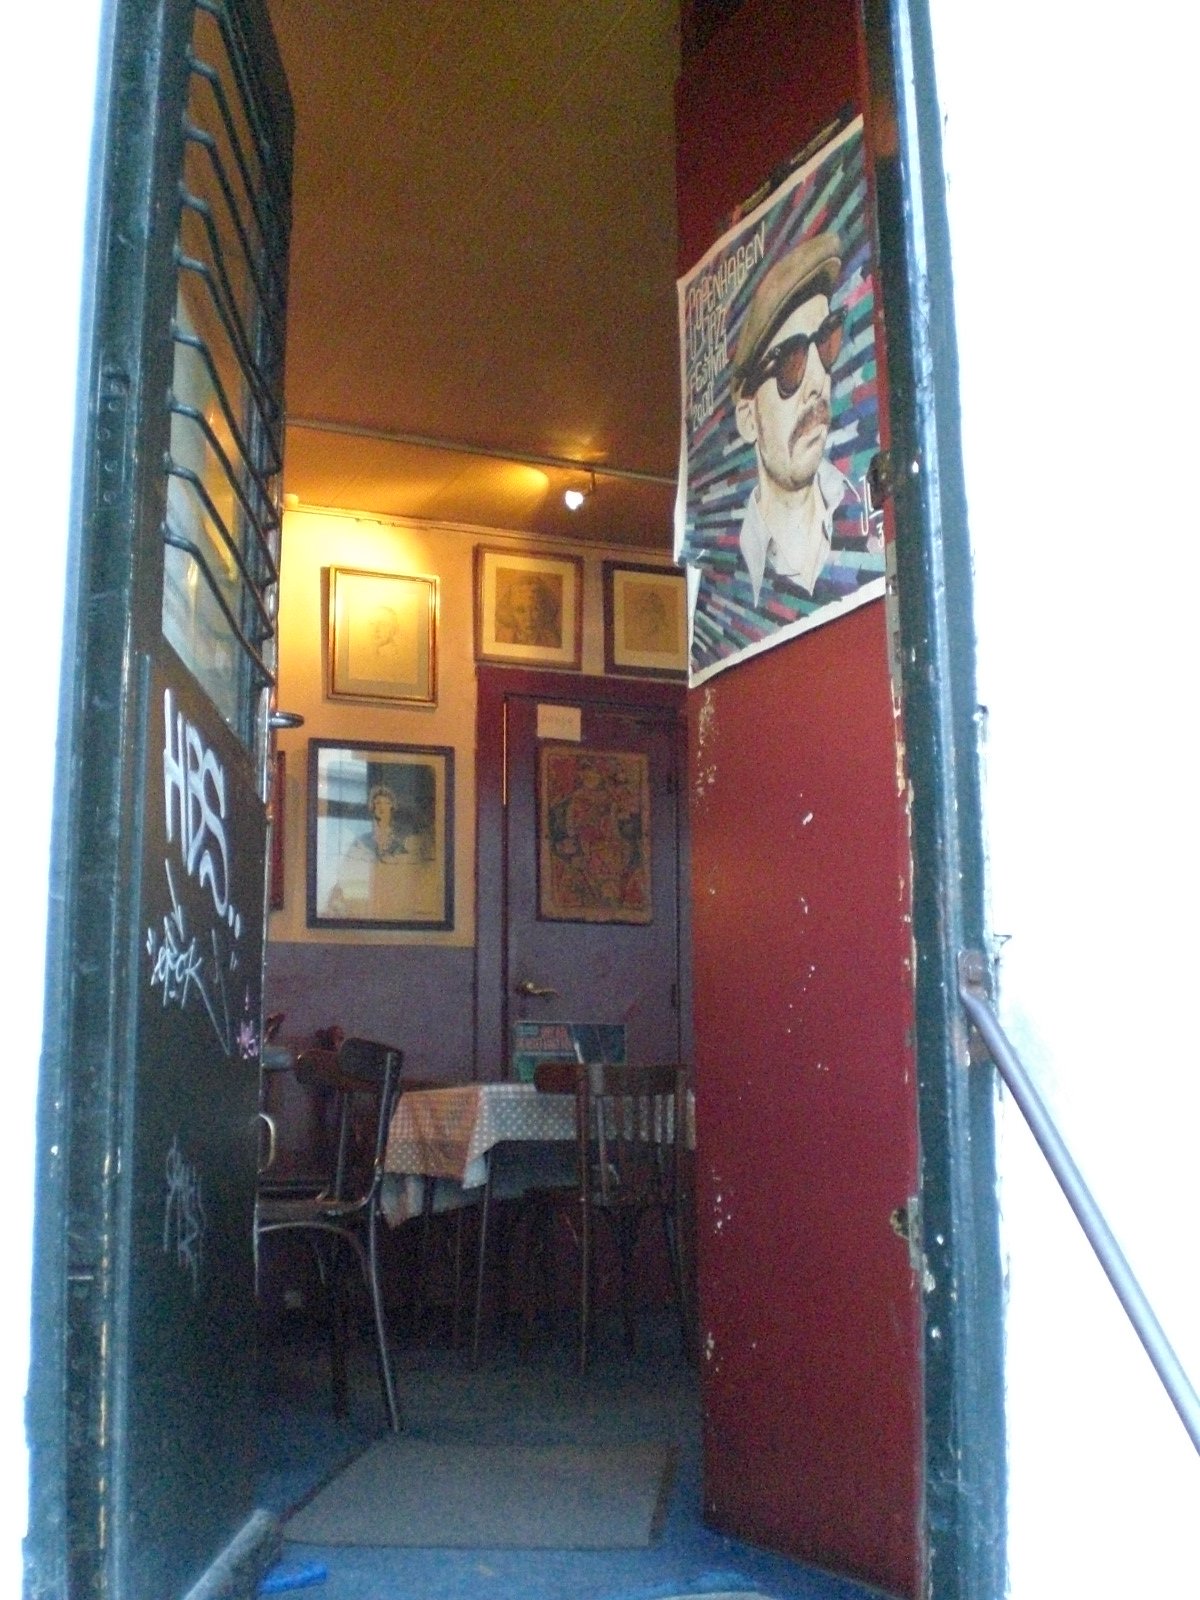 Café & Bar Barock